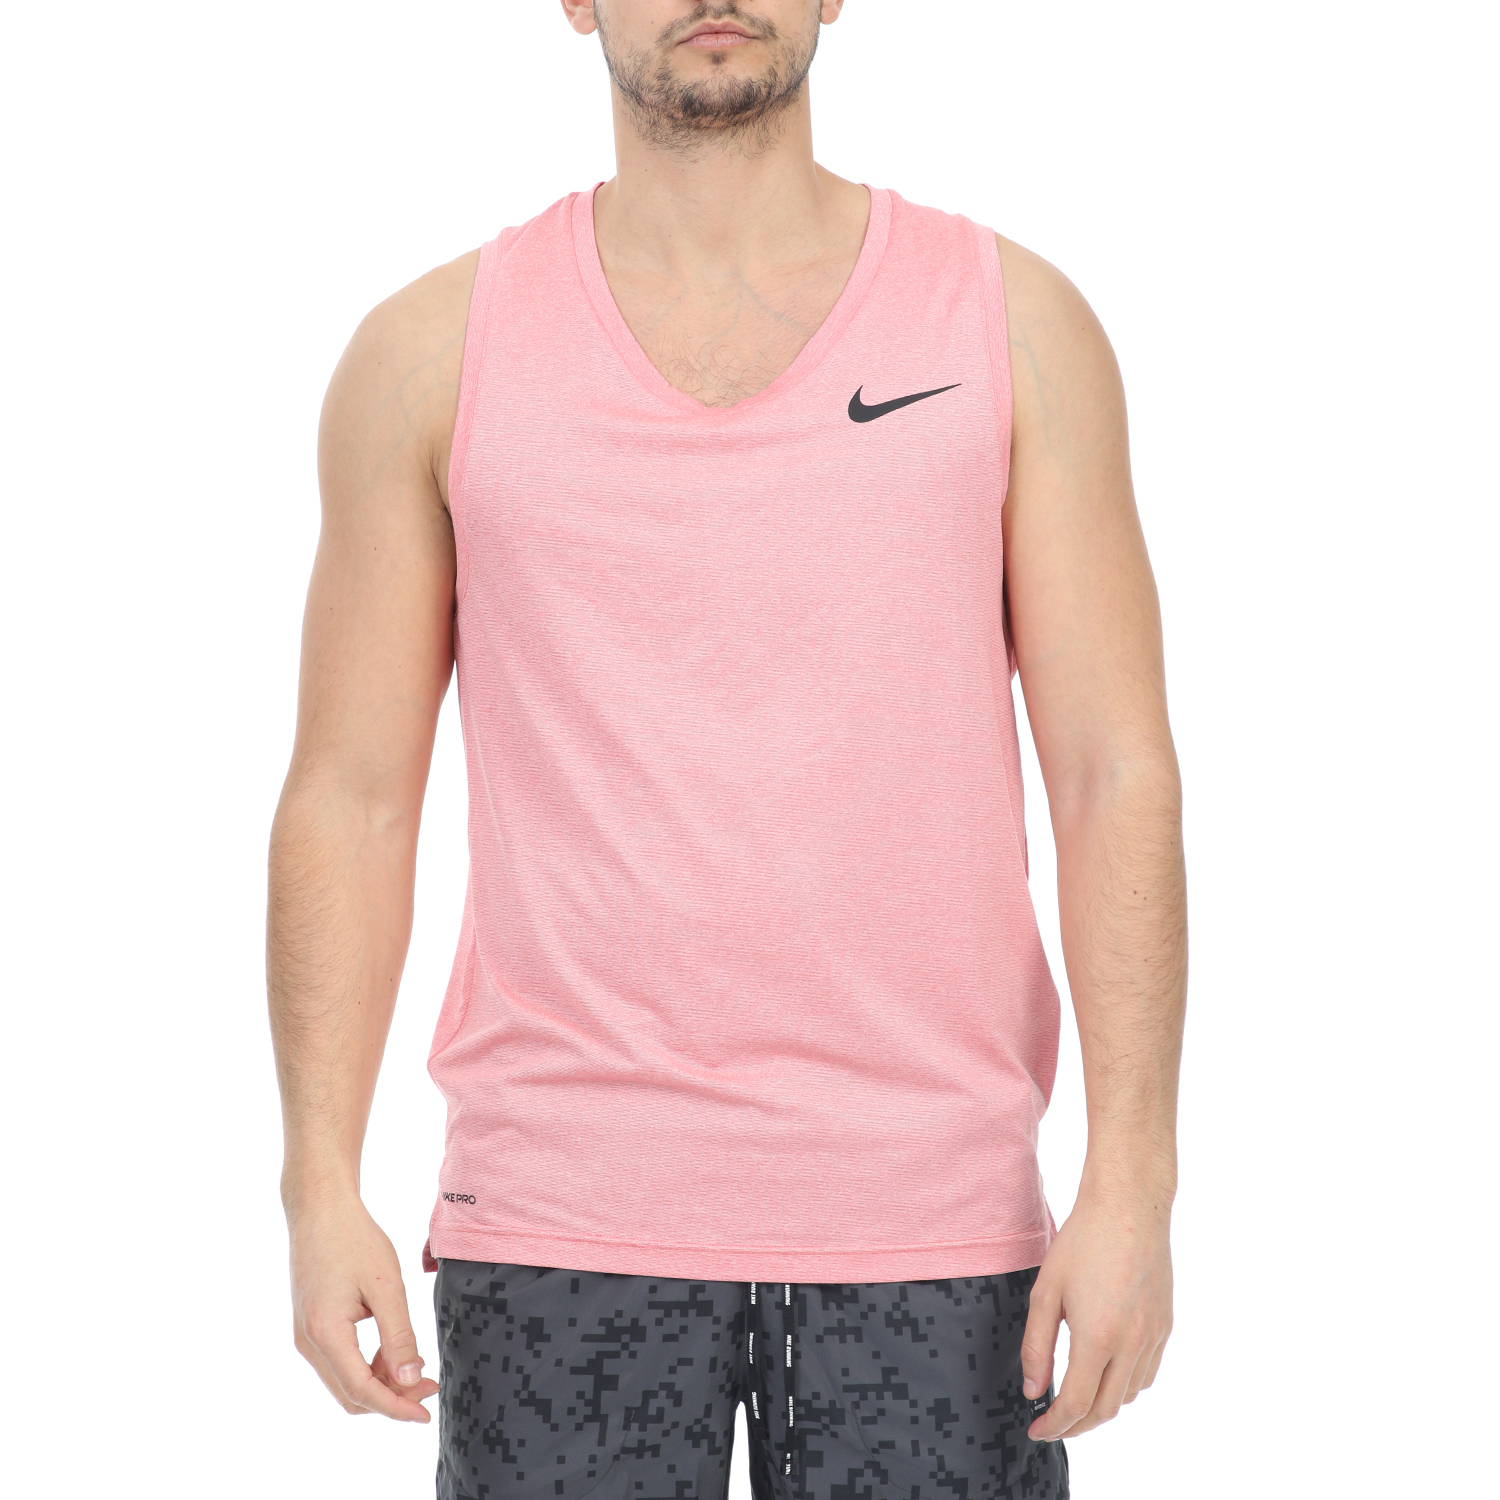 NIKE Ανδρική αμάνικη μπλούζα NIKE TOP TANK HPR DRY ροζ